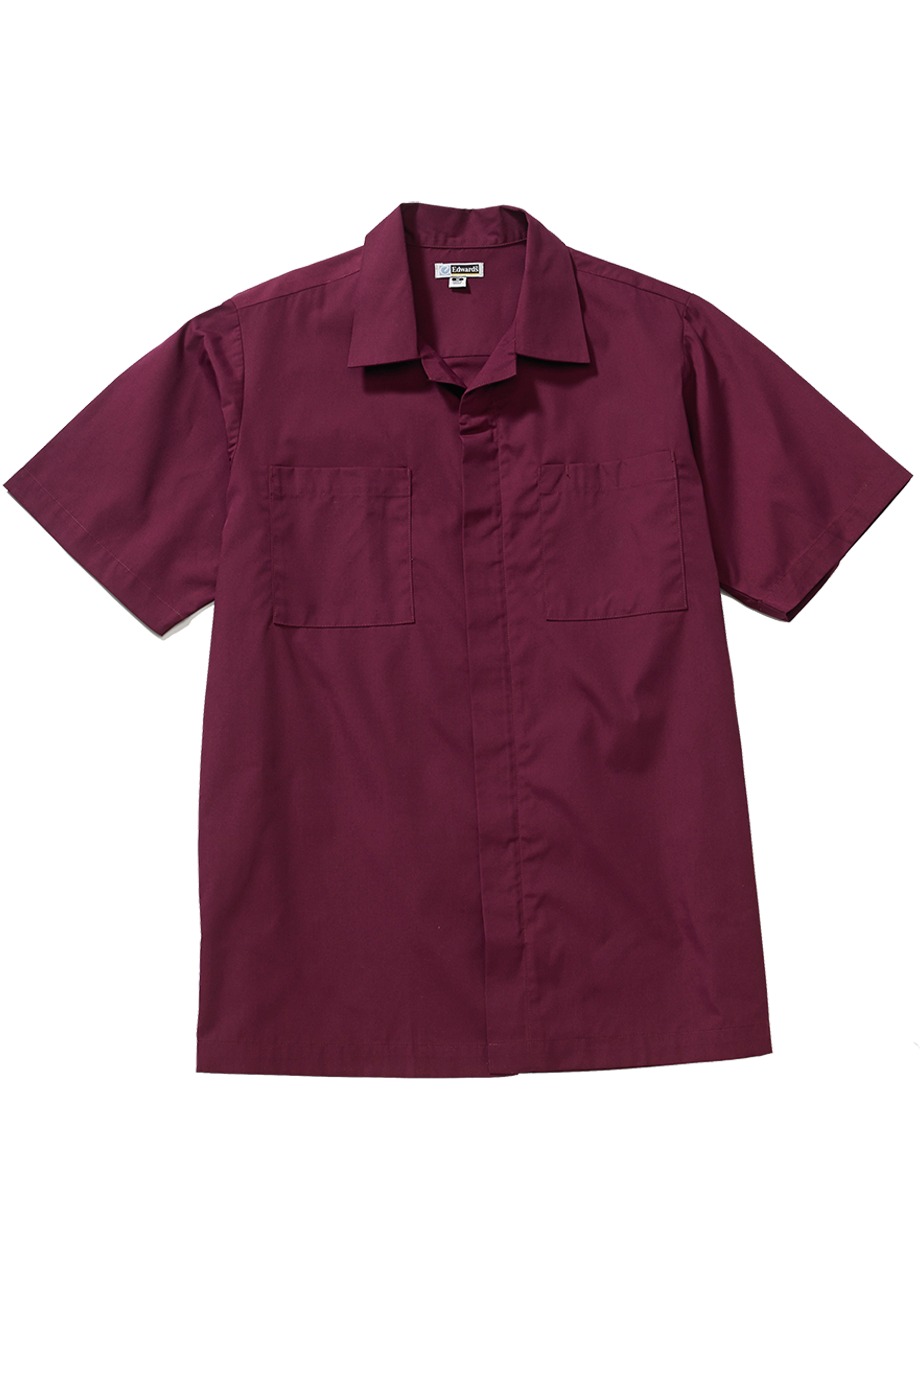 Edwards Garment 4889 - Housekeeping Service Shirt